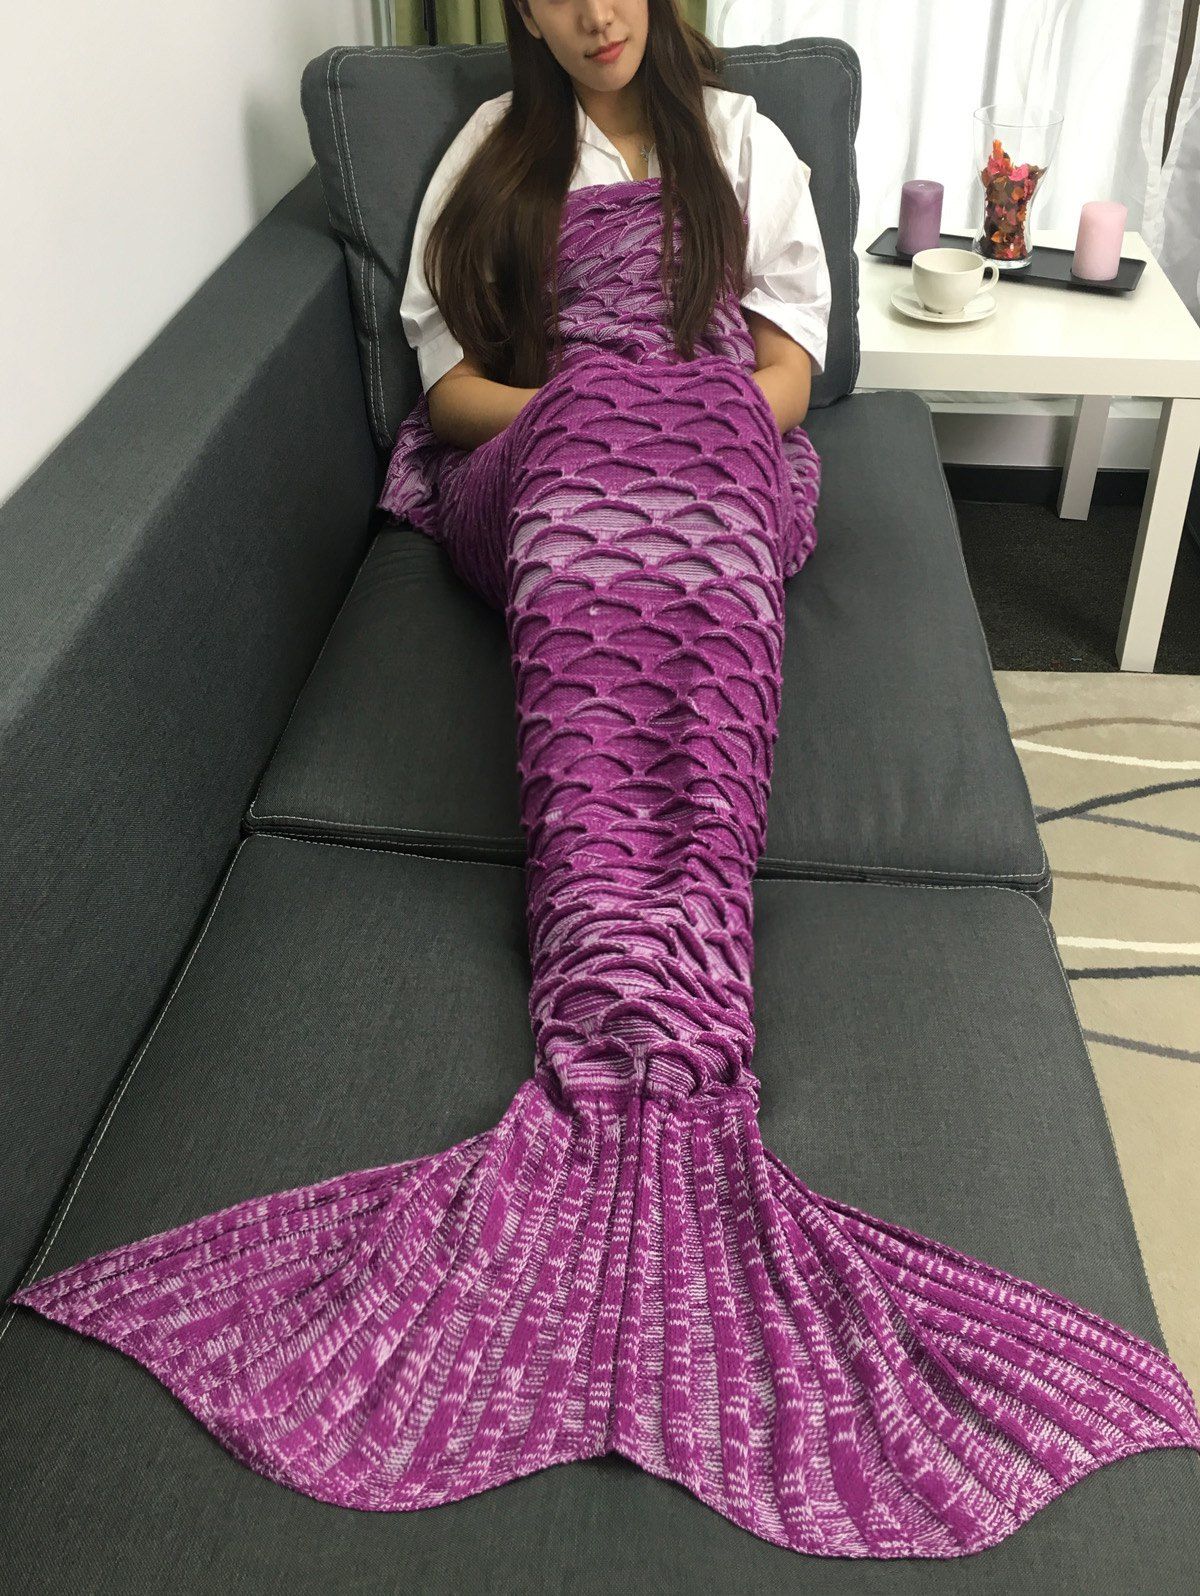 Chic Portable Latticed Style Mermaid Tail Blanket  